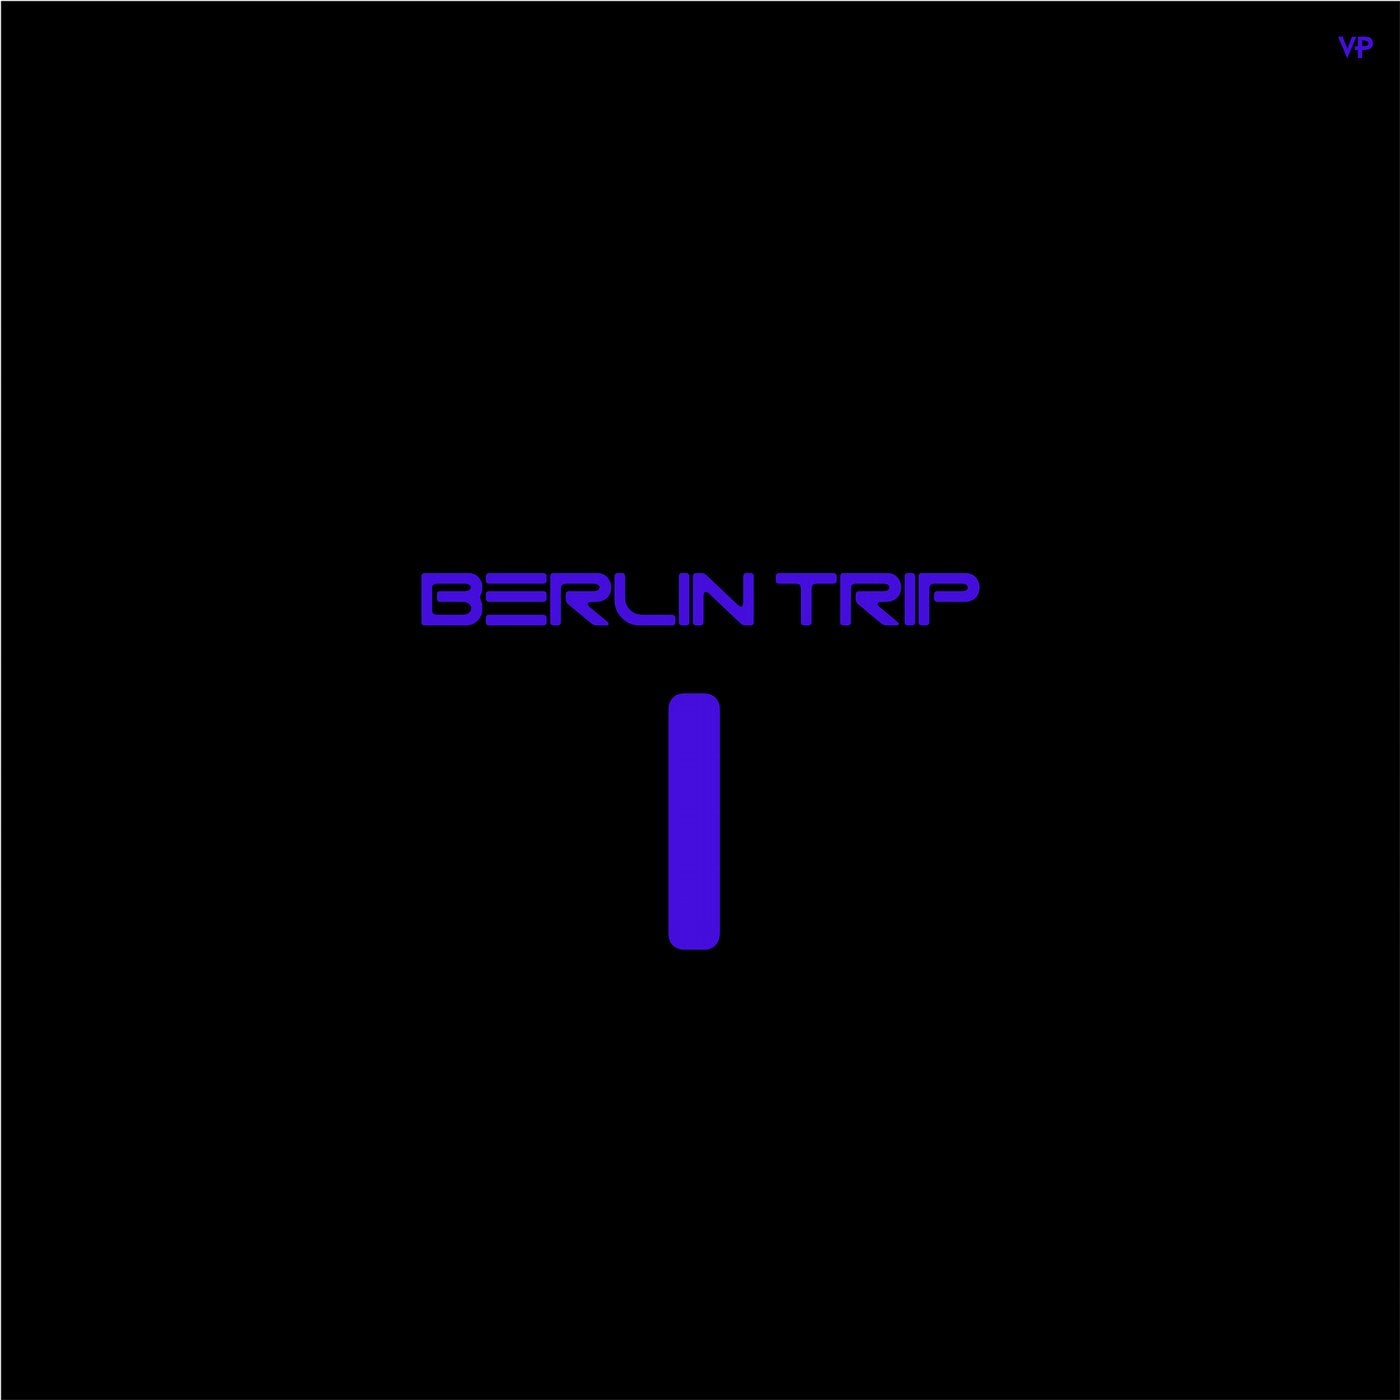 Berlin Trip I